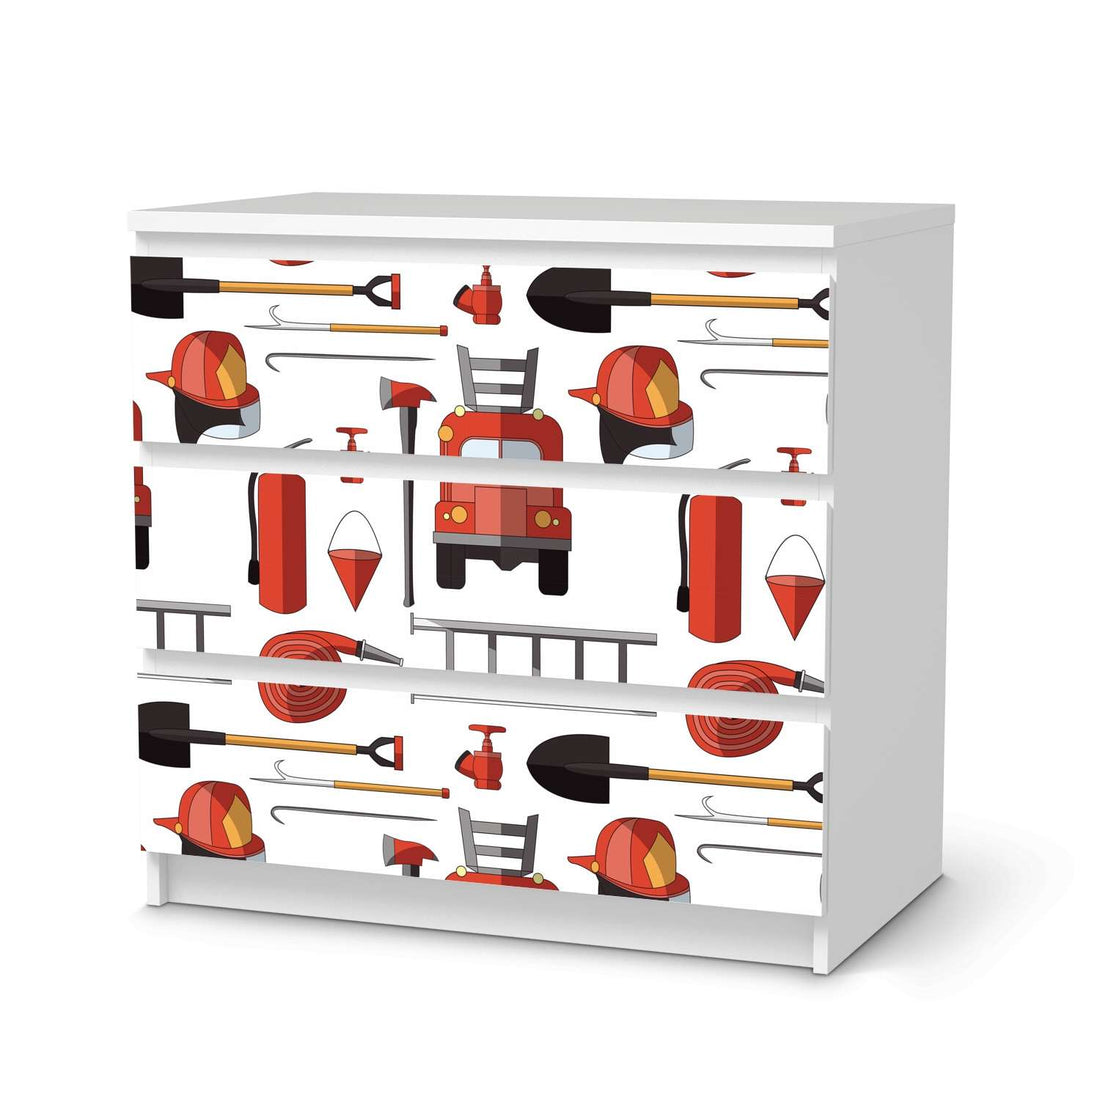 Klebefolie für Möbel Firefighter - IKEA Malm Kommode 3 Schubladen  - weiss